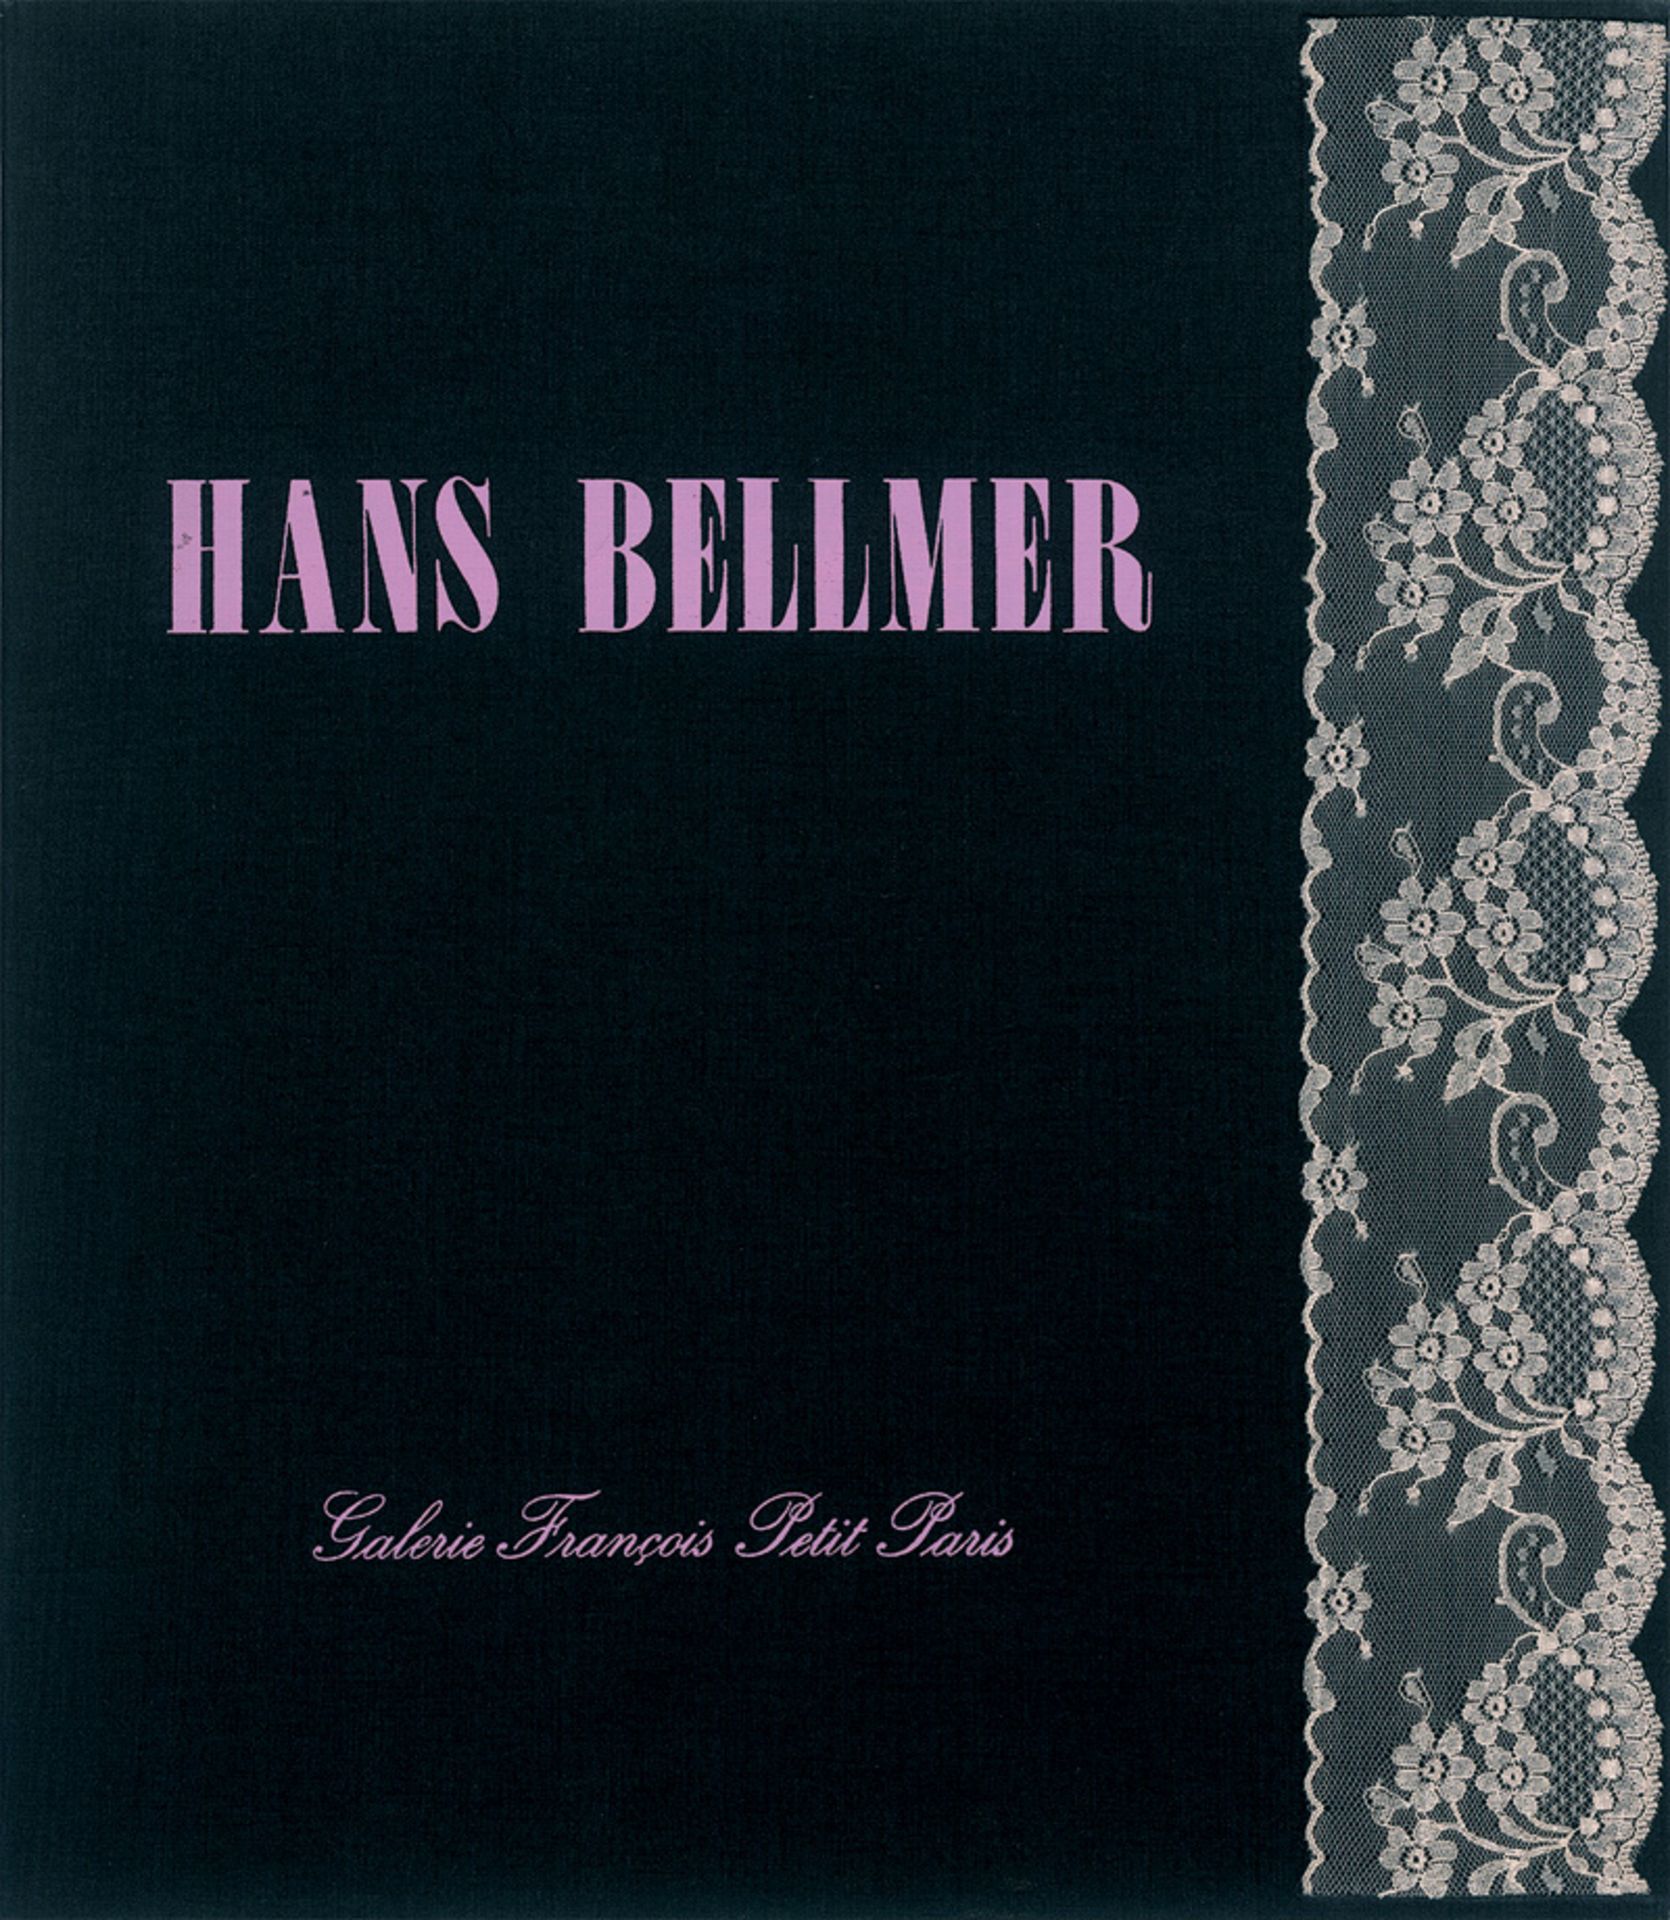 Bellmer, Hans: Hans Bellmer Photographies (Images from the "Poupée" ser... - Image 6 of 6